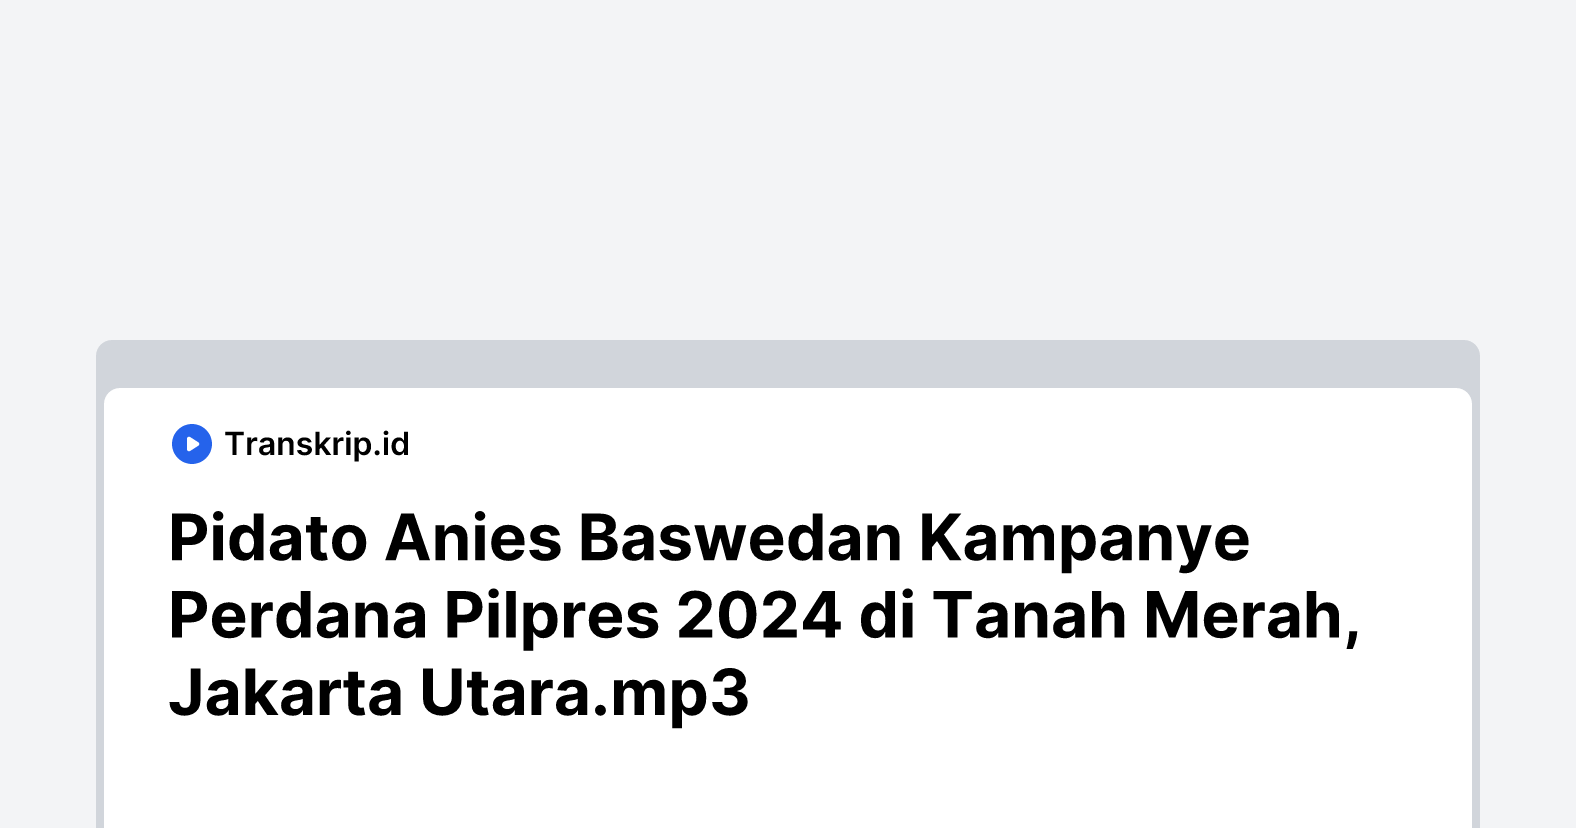 Pidato Anies Baswedan Kampanye Perdana Pilpres 2024 di Tanah Merah, Jakarta Utara.mp3